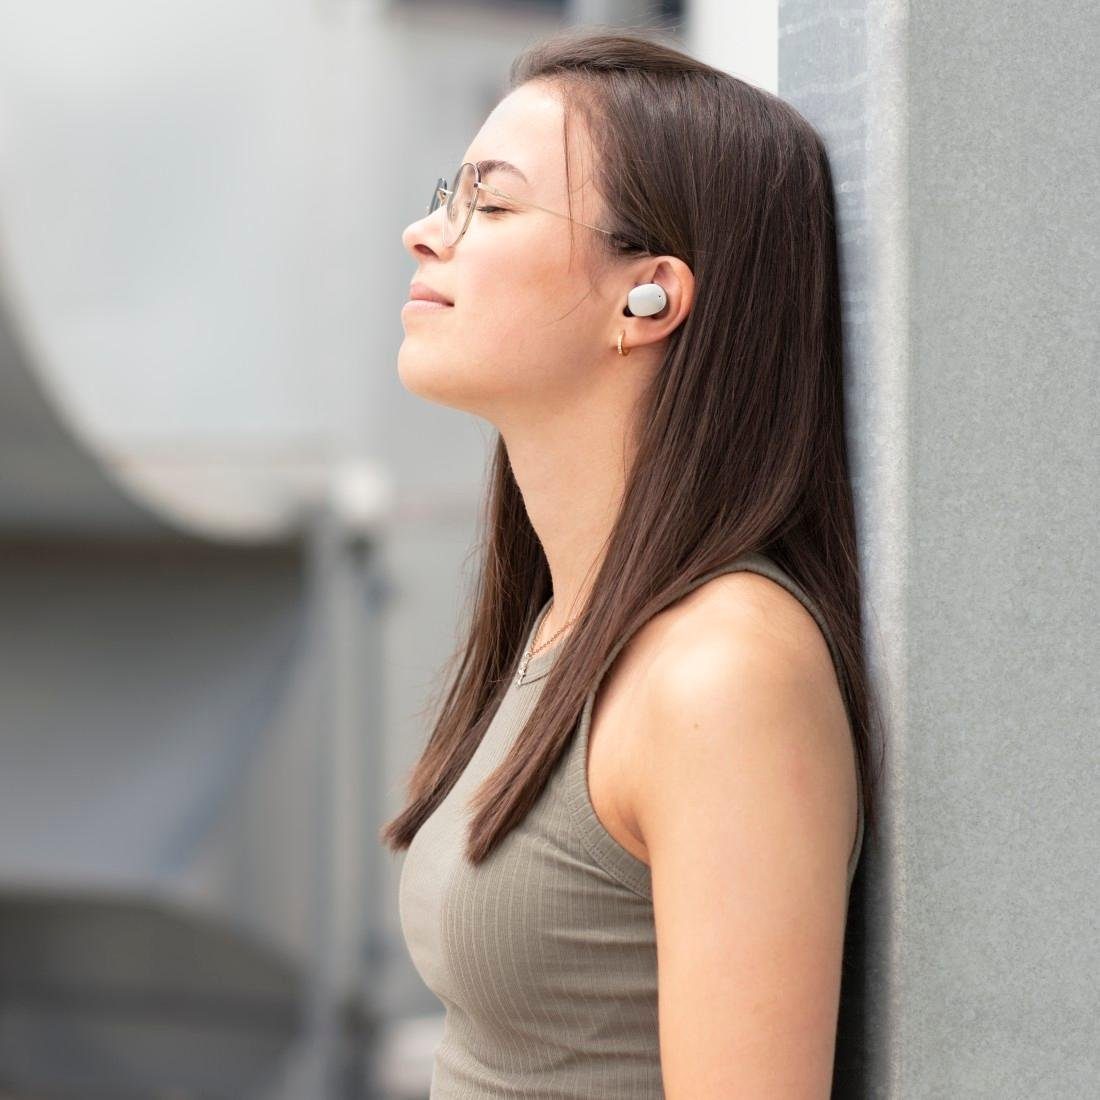 In Finger-Touch Pure Hama Siri, Lautstärkeregler,Rufannahmetaste, Bluetooth-Kopfhörer Spirit BT (Google Wireless, schwarz Sensor, Assistant, Sprachsteuerung) True Kopfhörer Ear kabellos